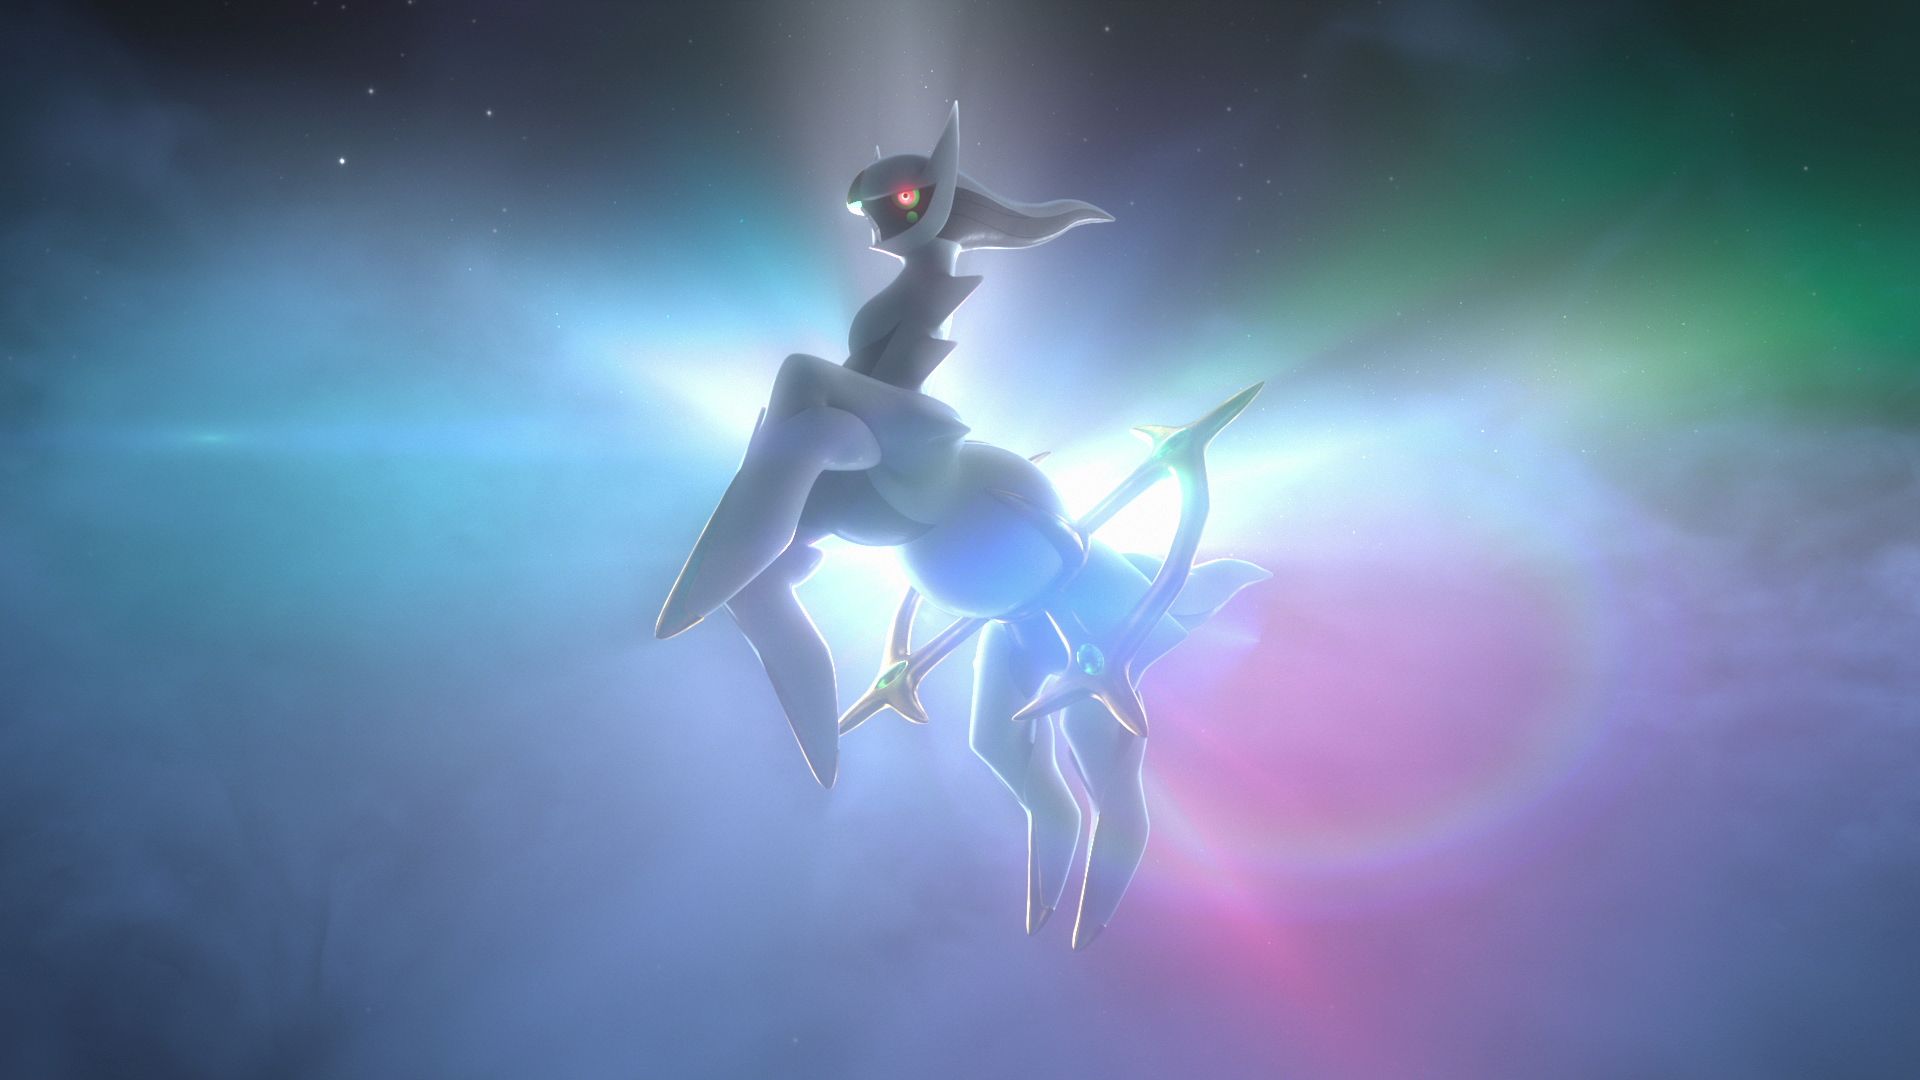 the godlike Pokémon Arceus on a rainbow background in Pokémon Legends: Arceus